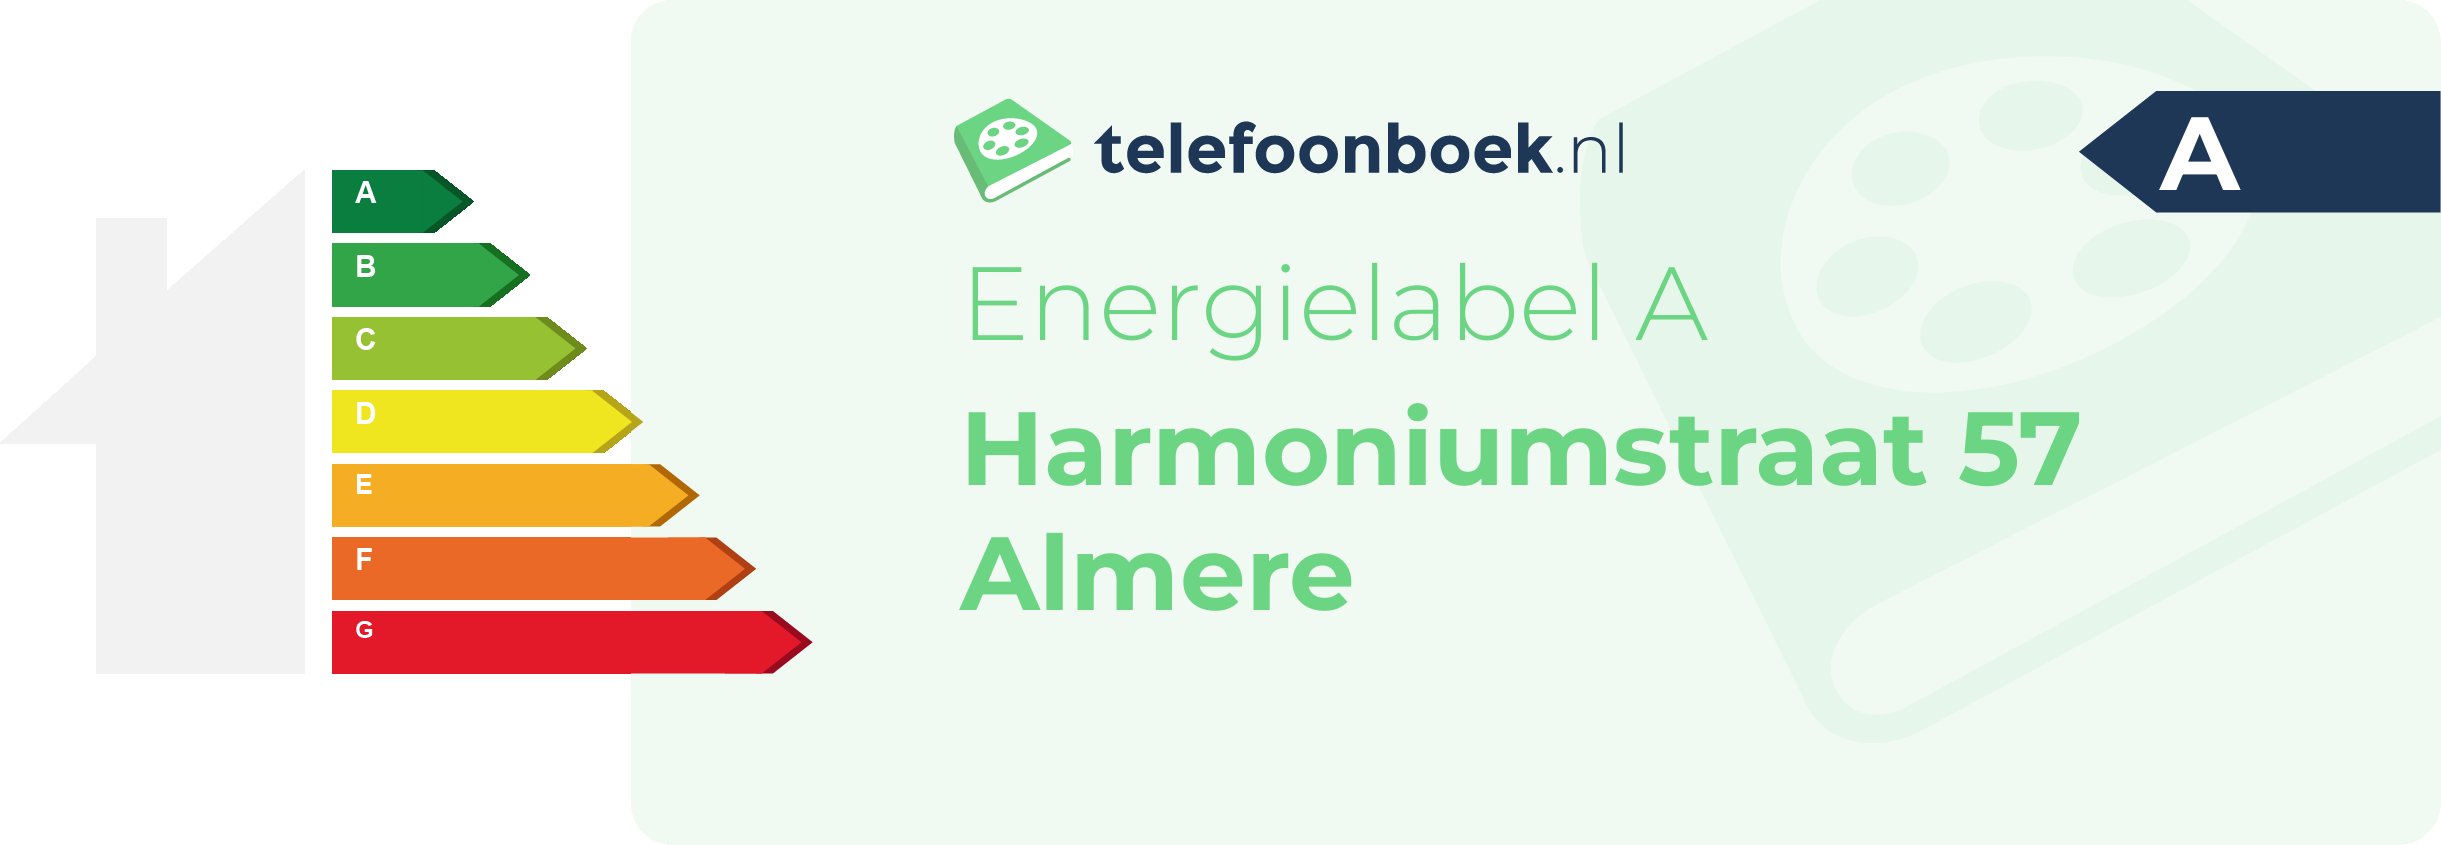 Energielabel Harmoniumstraat 57 Almere